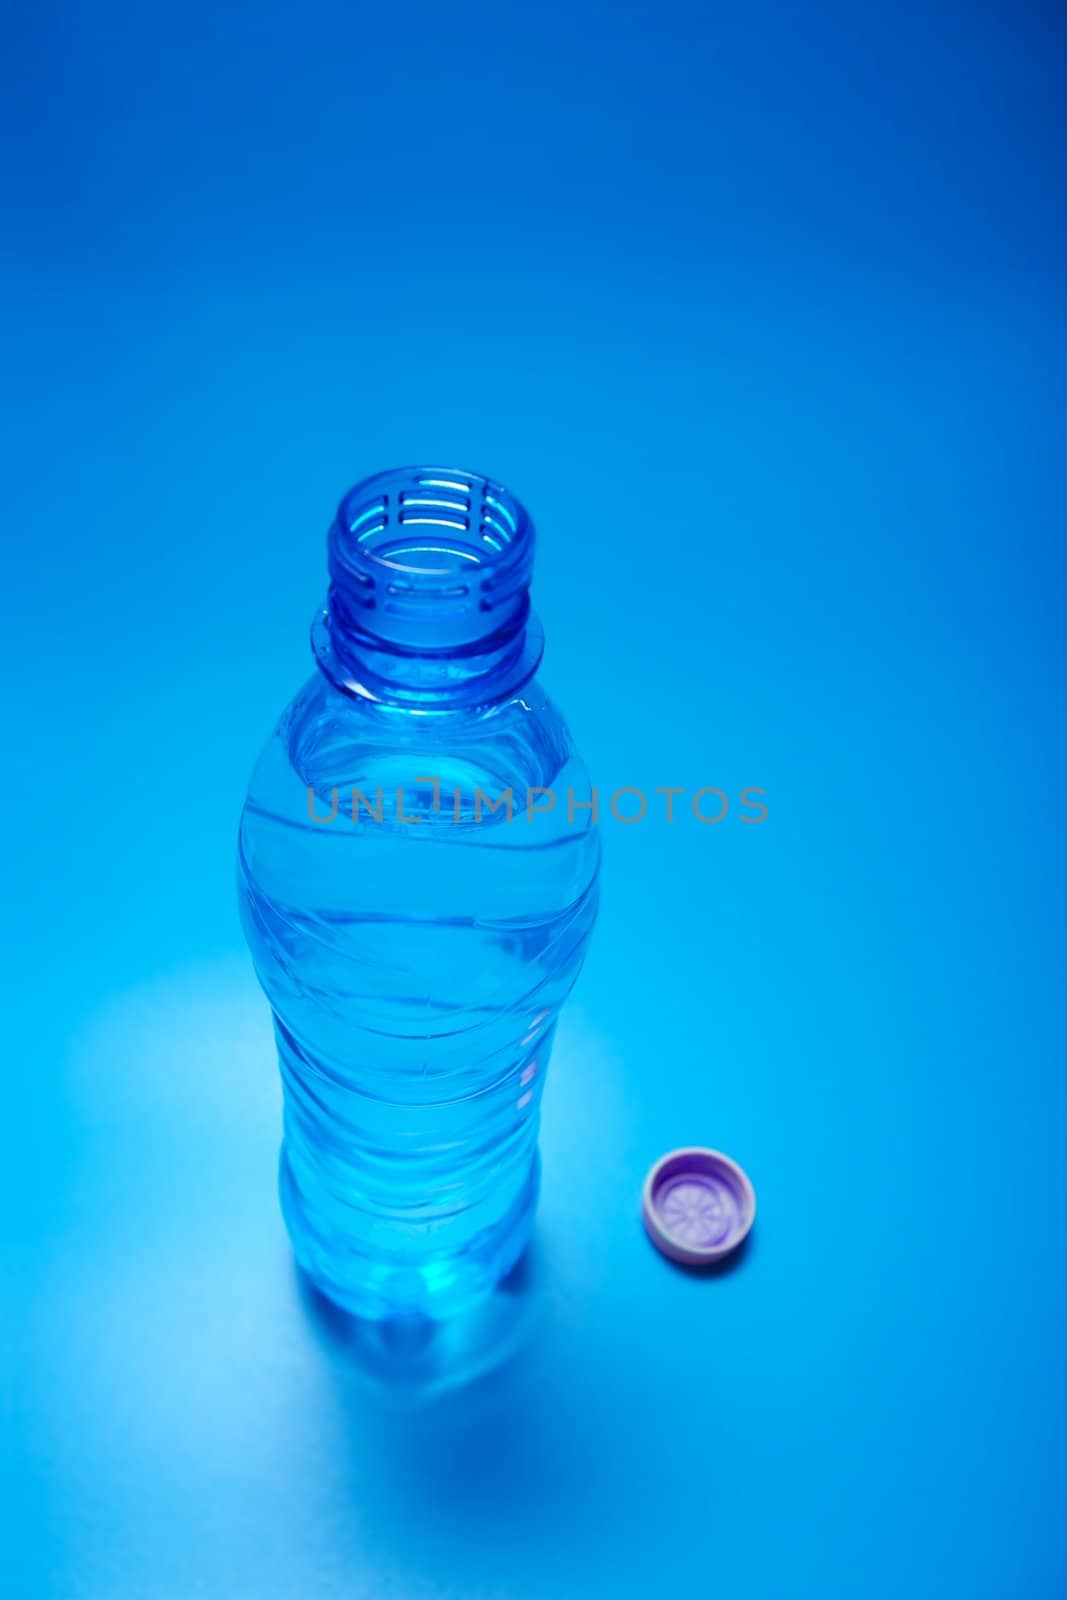 Open bottle of water on blue background